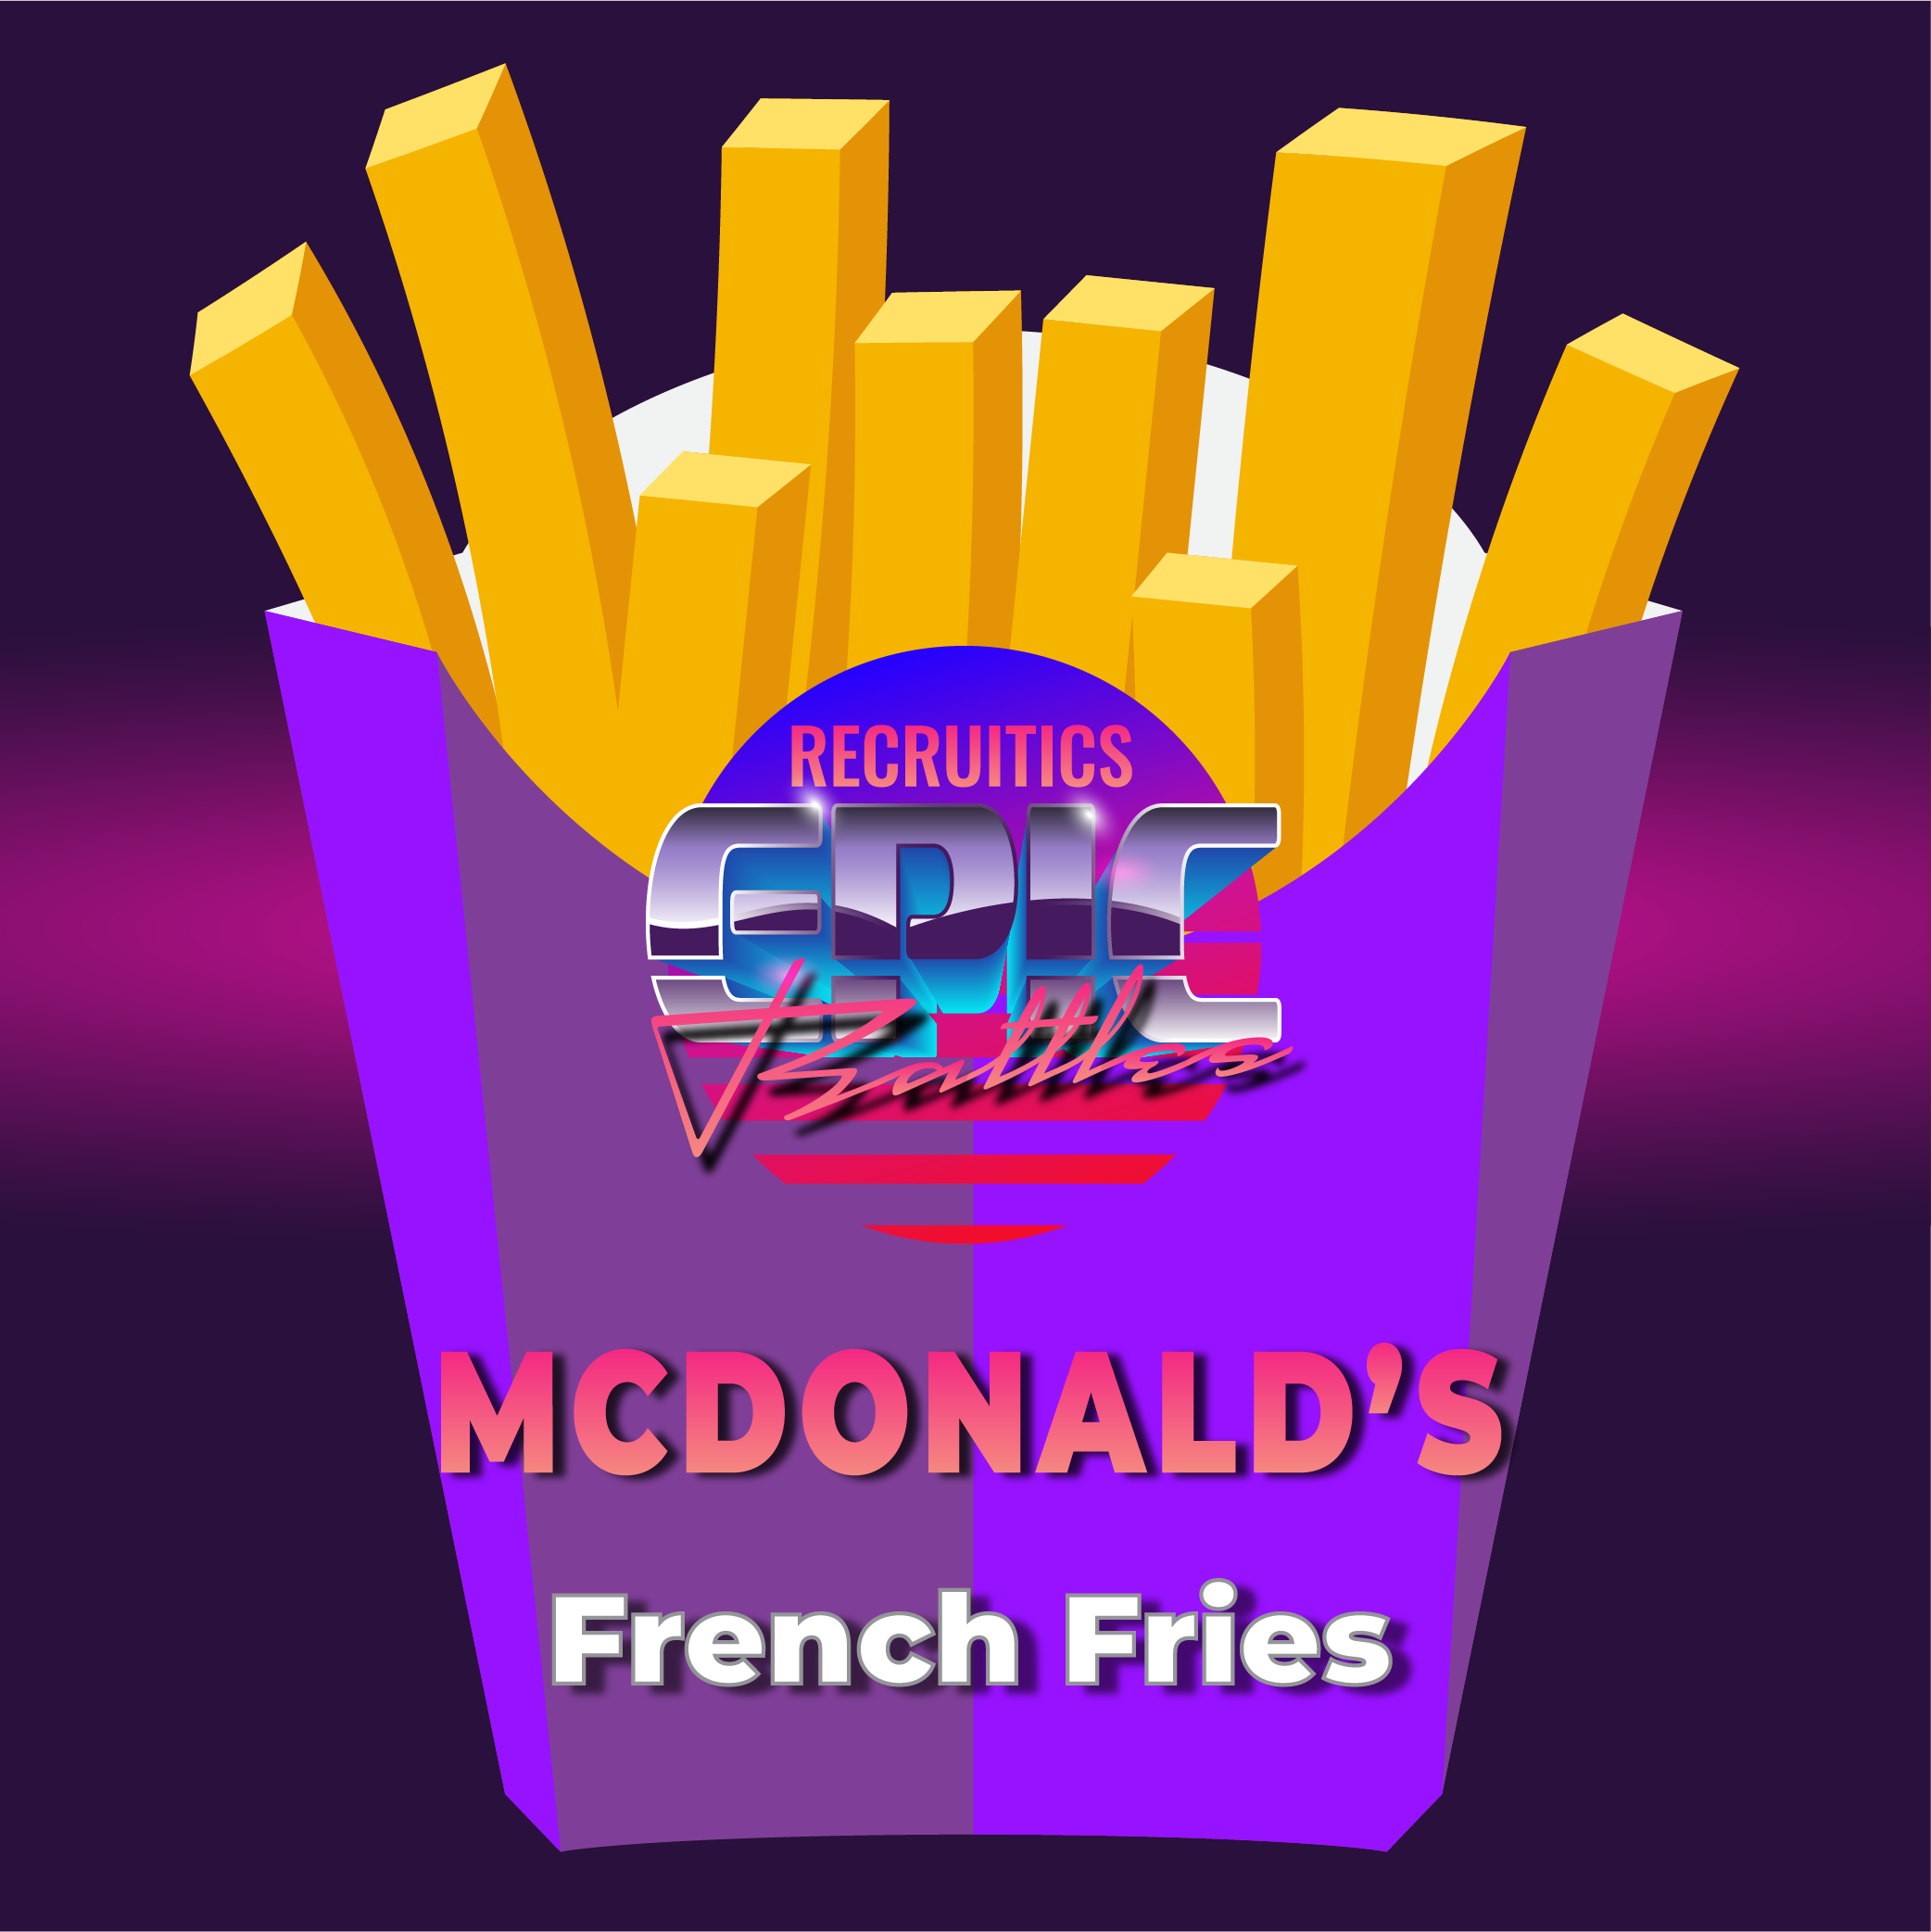 epic battles recruitics best french fries mcdonalds 